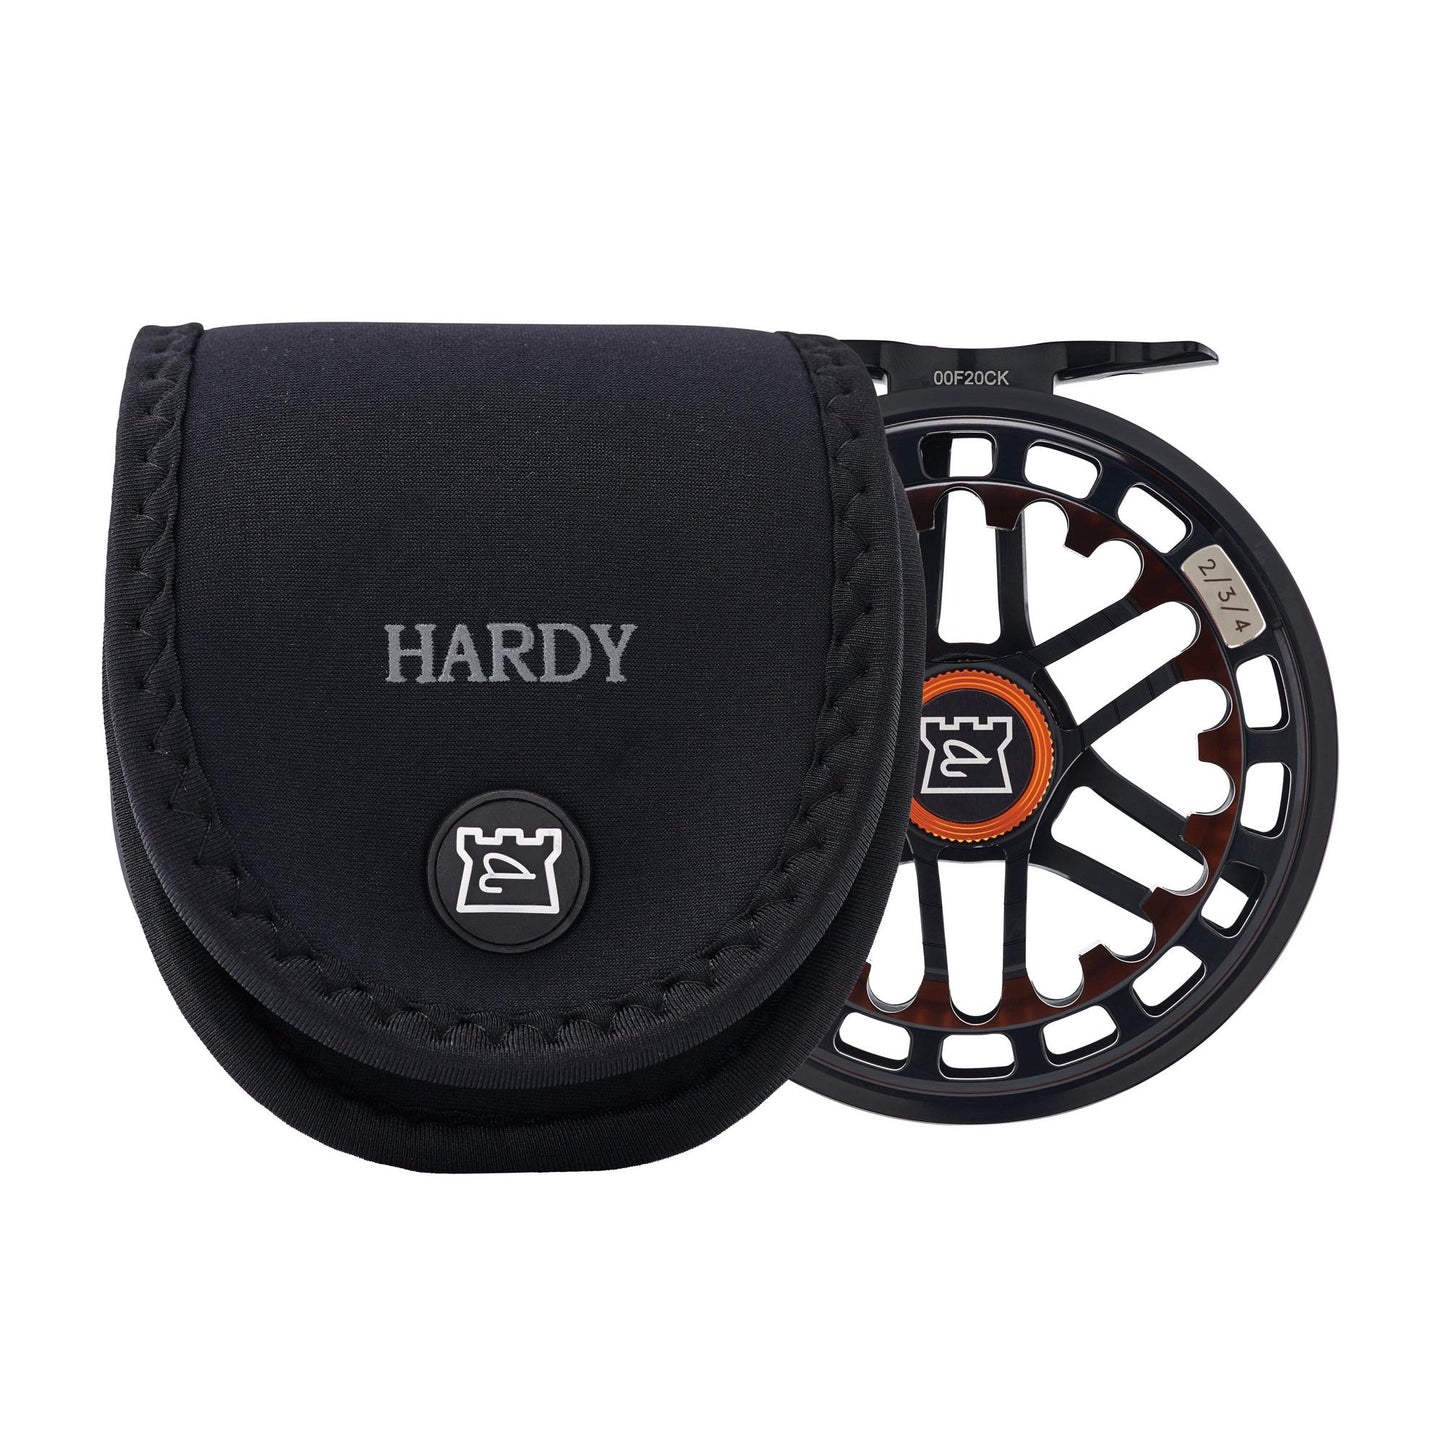 Hardy Ultradisc UDLA Fly Reel - 4000